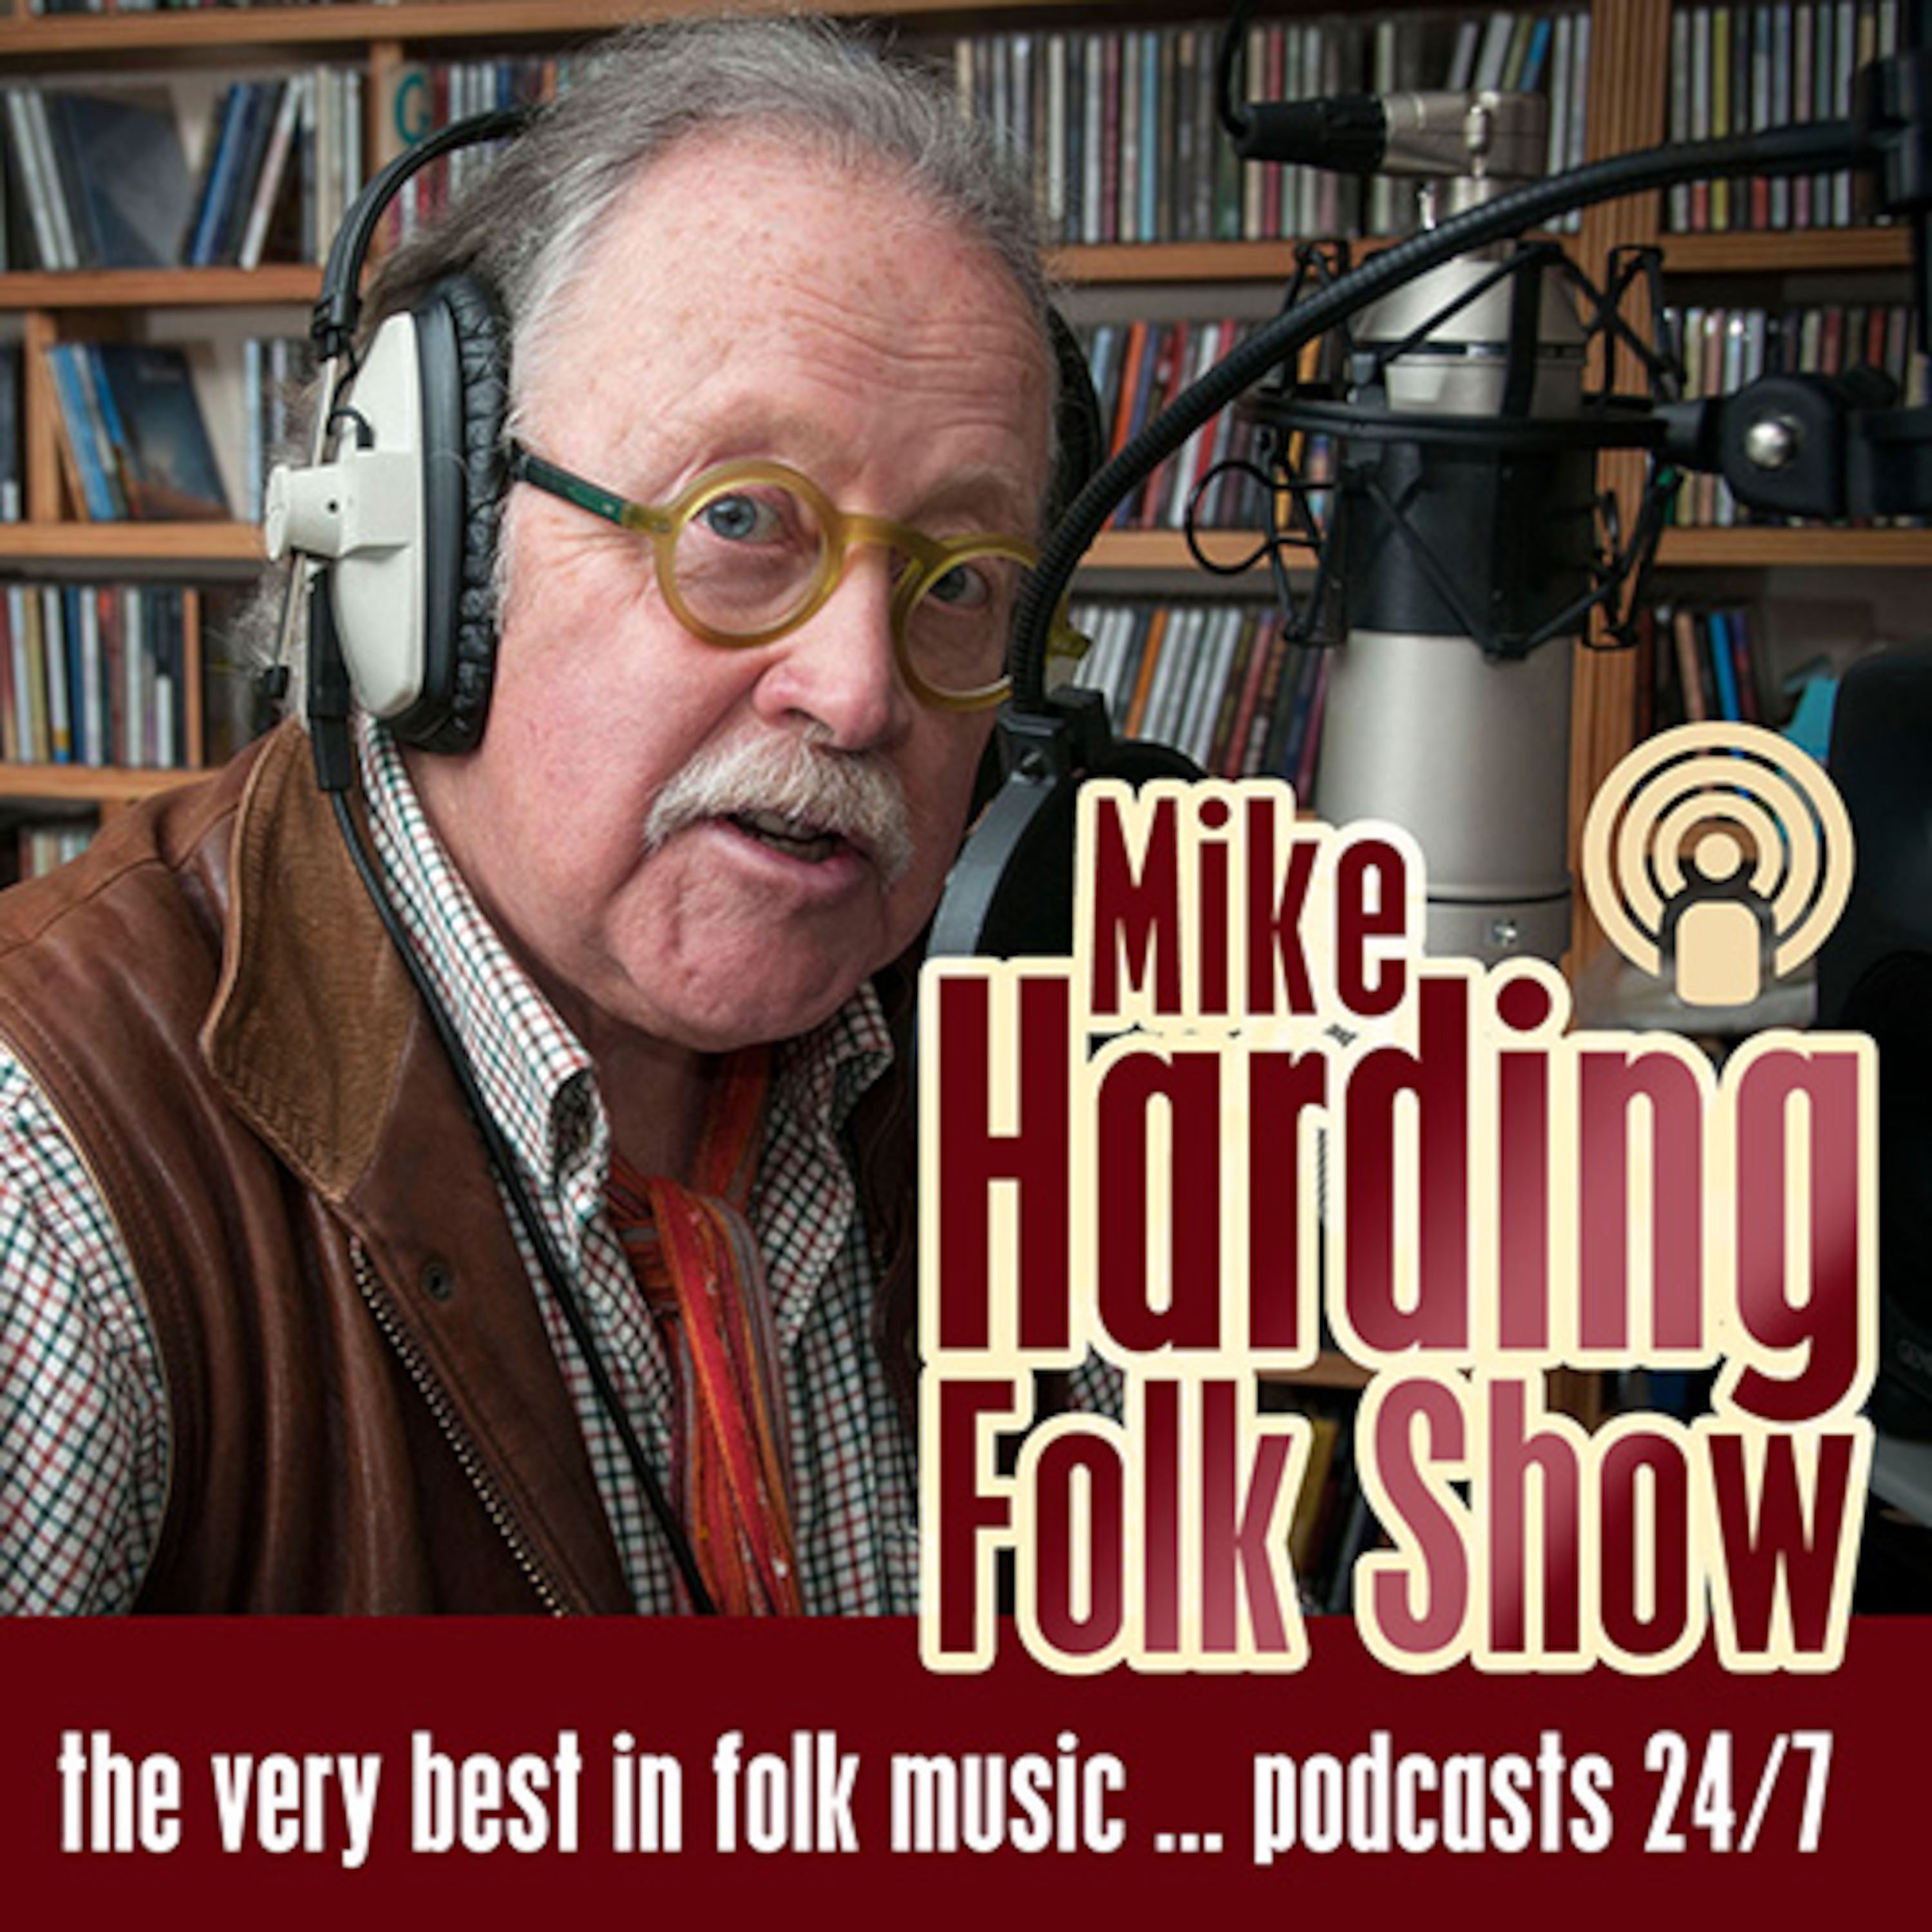 Mike Harding Folk Show 122